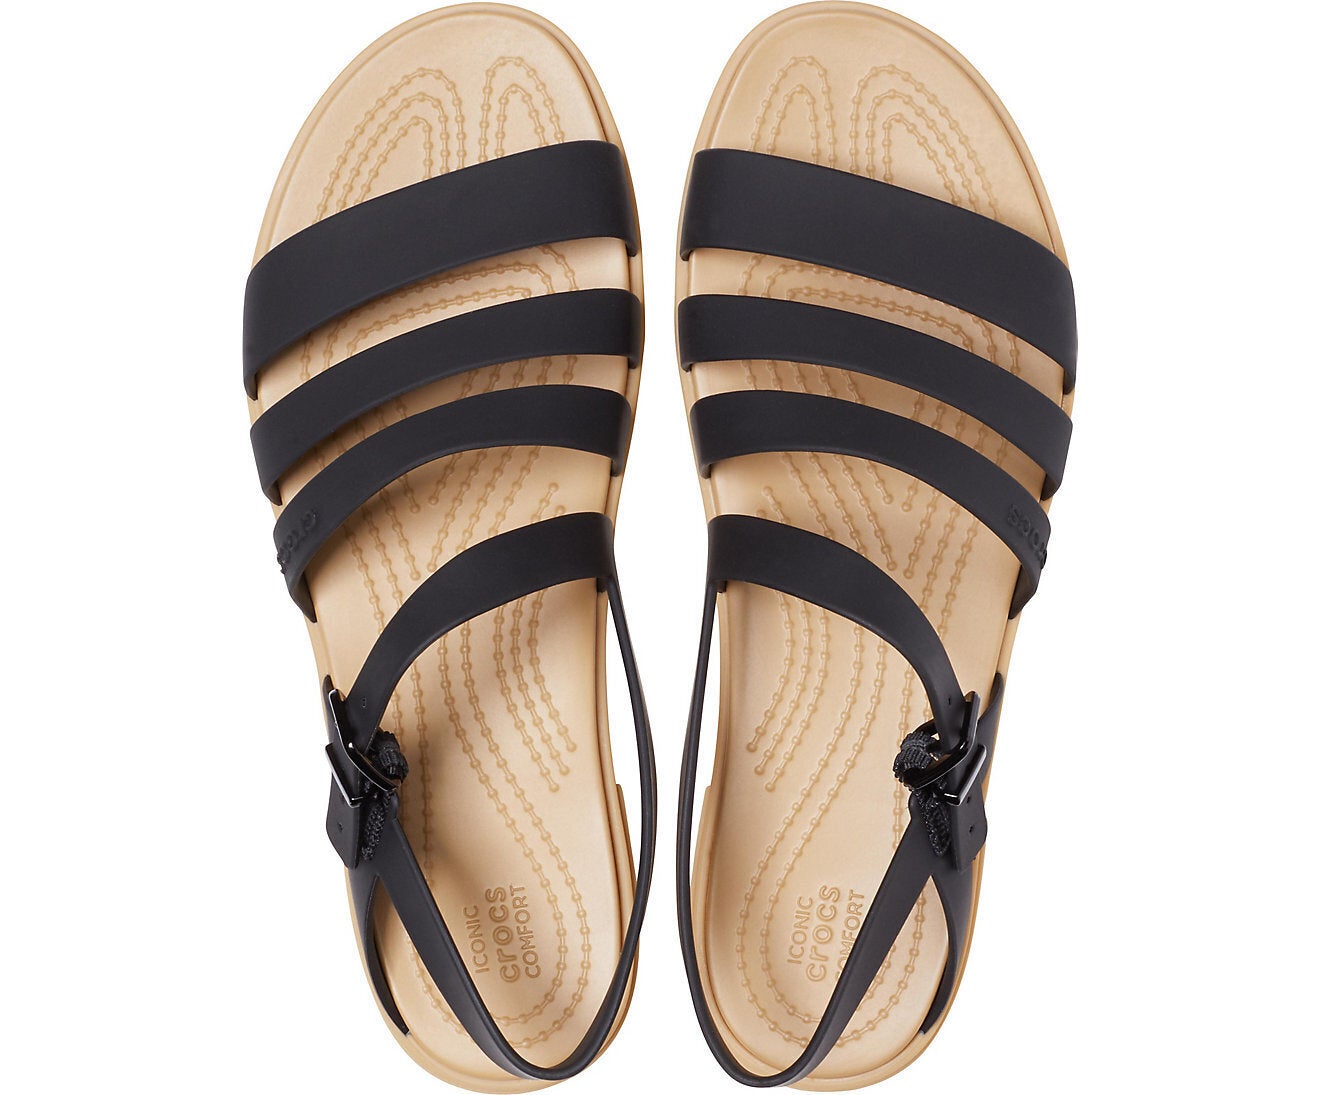 Crocs Tulum Womens Sandals Open Toe Flats Slip On Thongs Summer